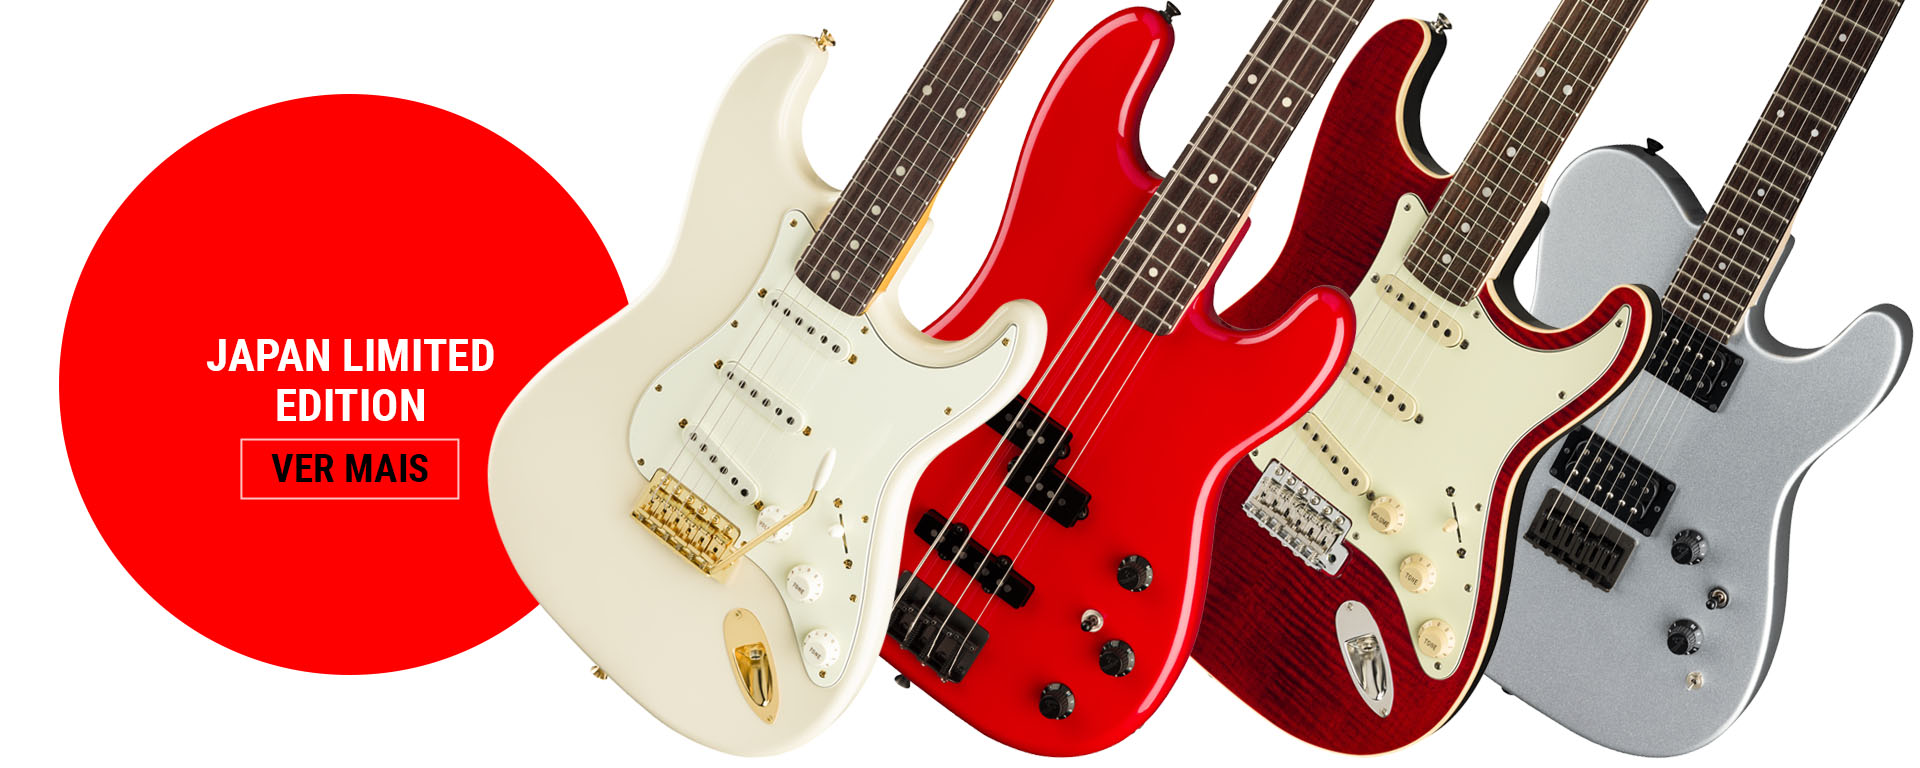 Guitarras Fender Japan Limited Edition